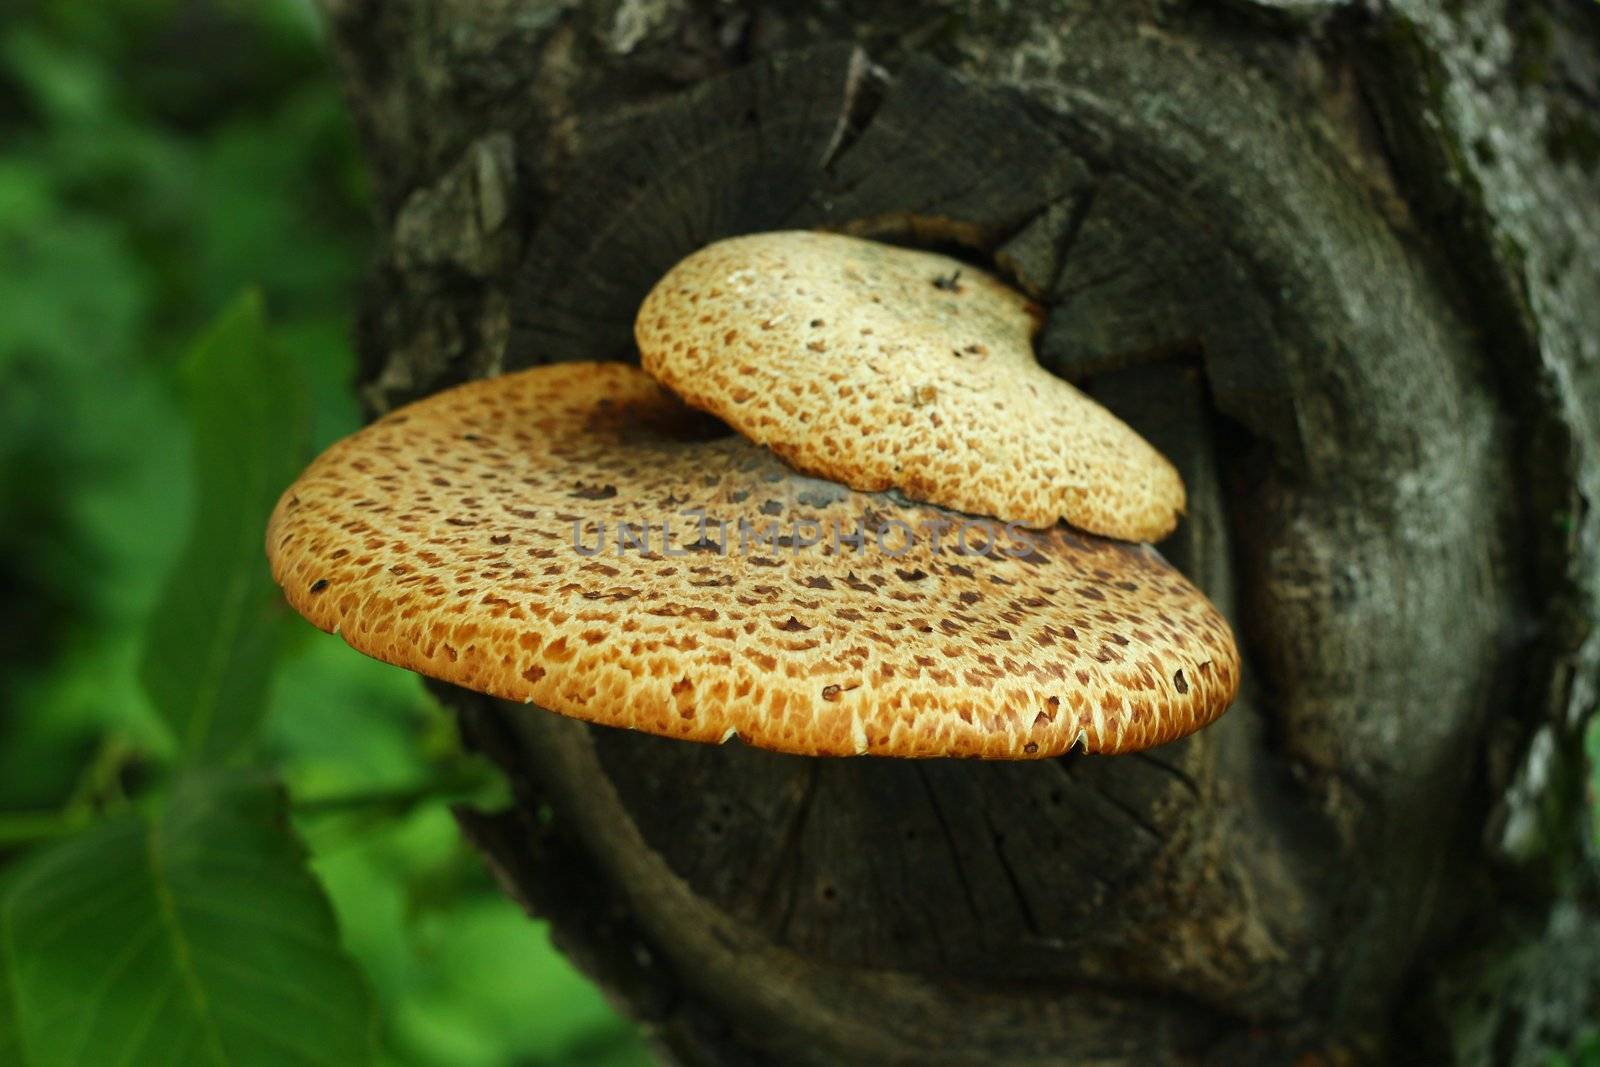 Big tree mushroom by catalinr